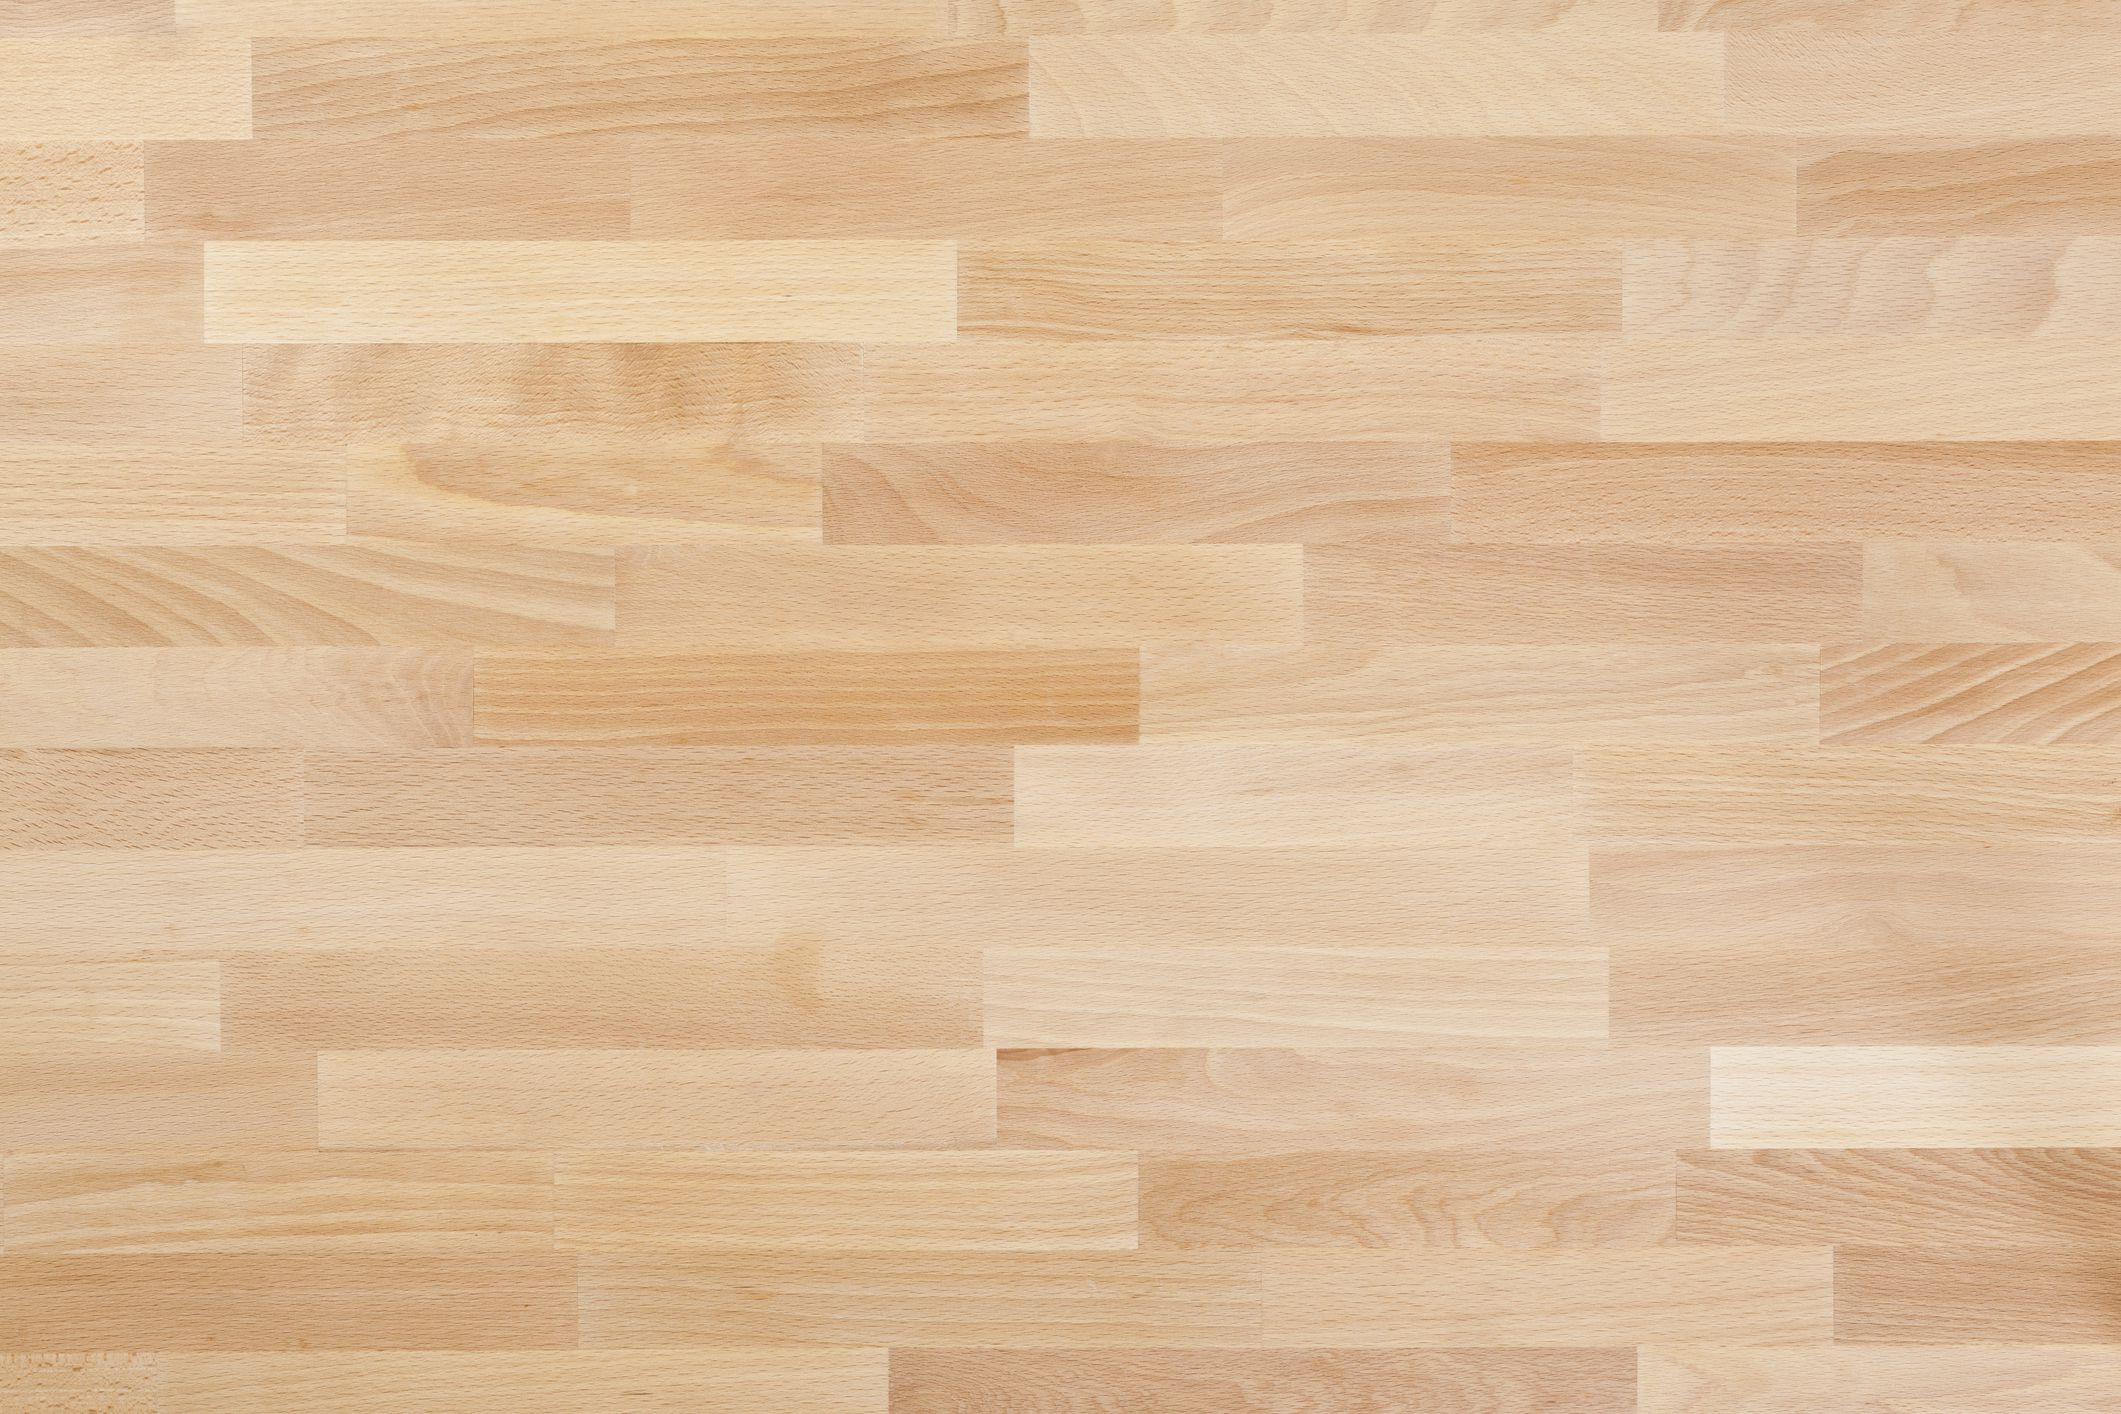 26 Fabulous Hardwood Floor Refinishing Cost Philadelphia 2024 free download hardwood floor refinishing cost philadelphia of does laminate flooring scratch easily in laminate flooring 185230326 58ff92175f9b581d595e760f